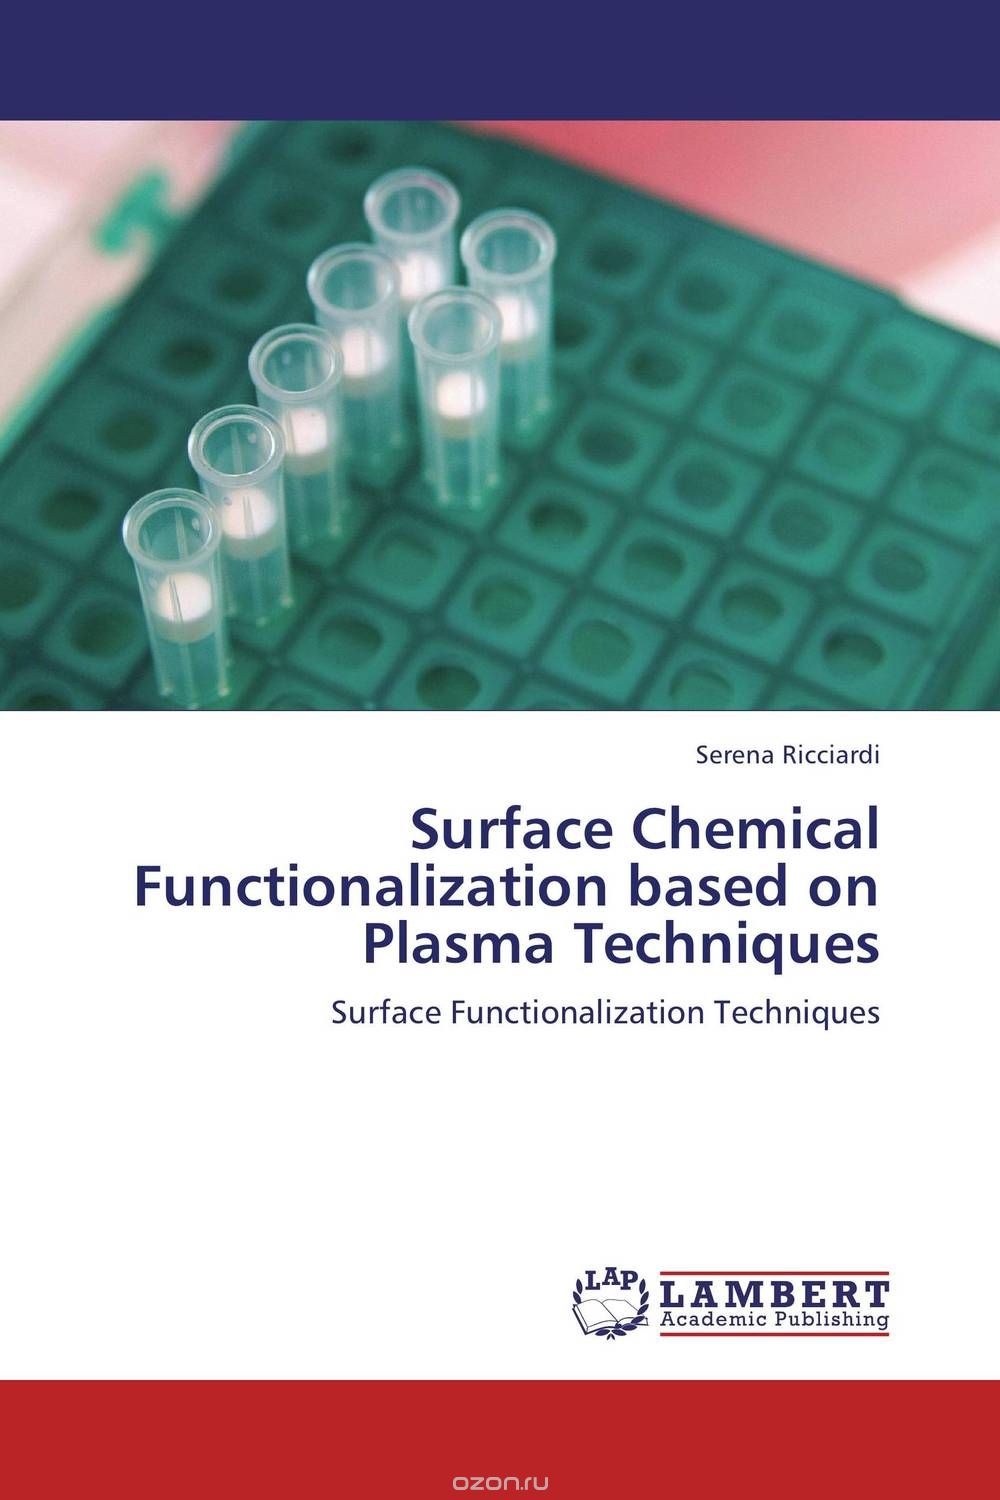 Скачать книгу "Surface Chemical Functionalization based on Plasma Techniques"